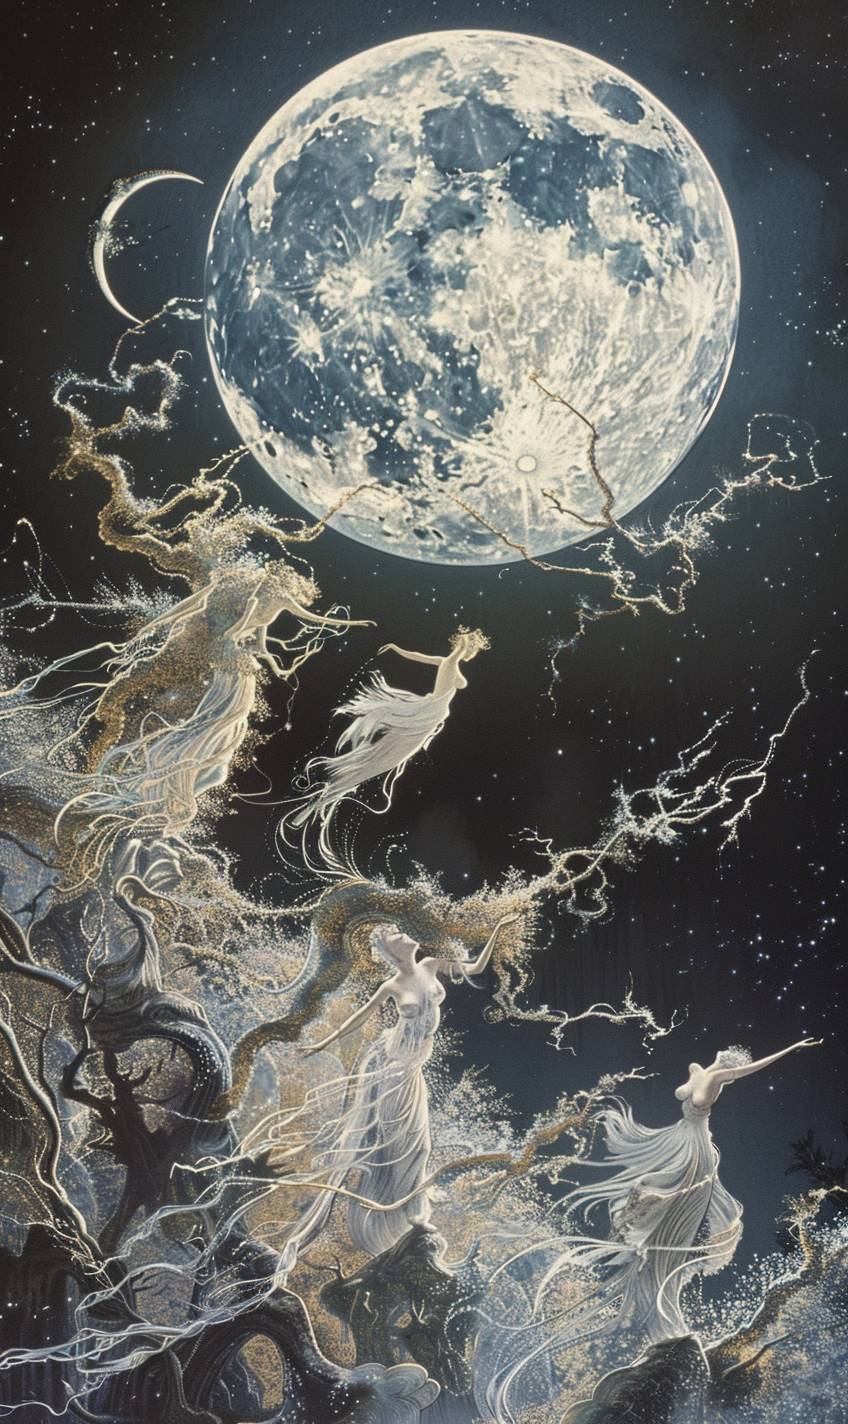 in style of Hajime Sorayama, Ethereal beings dancing under the moonlight